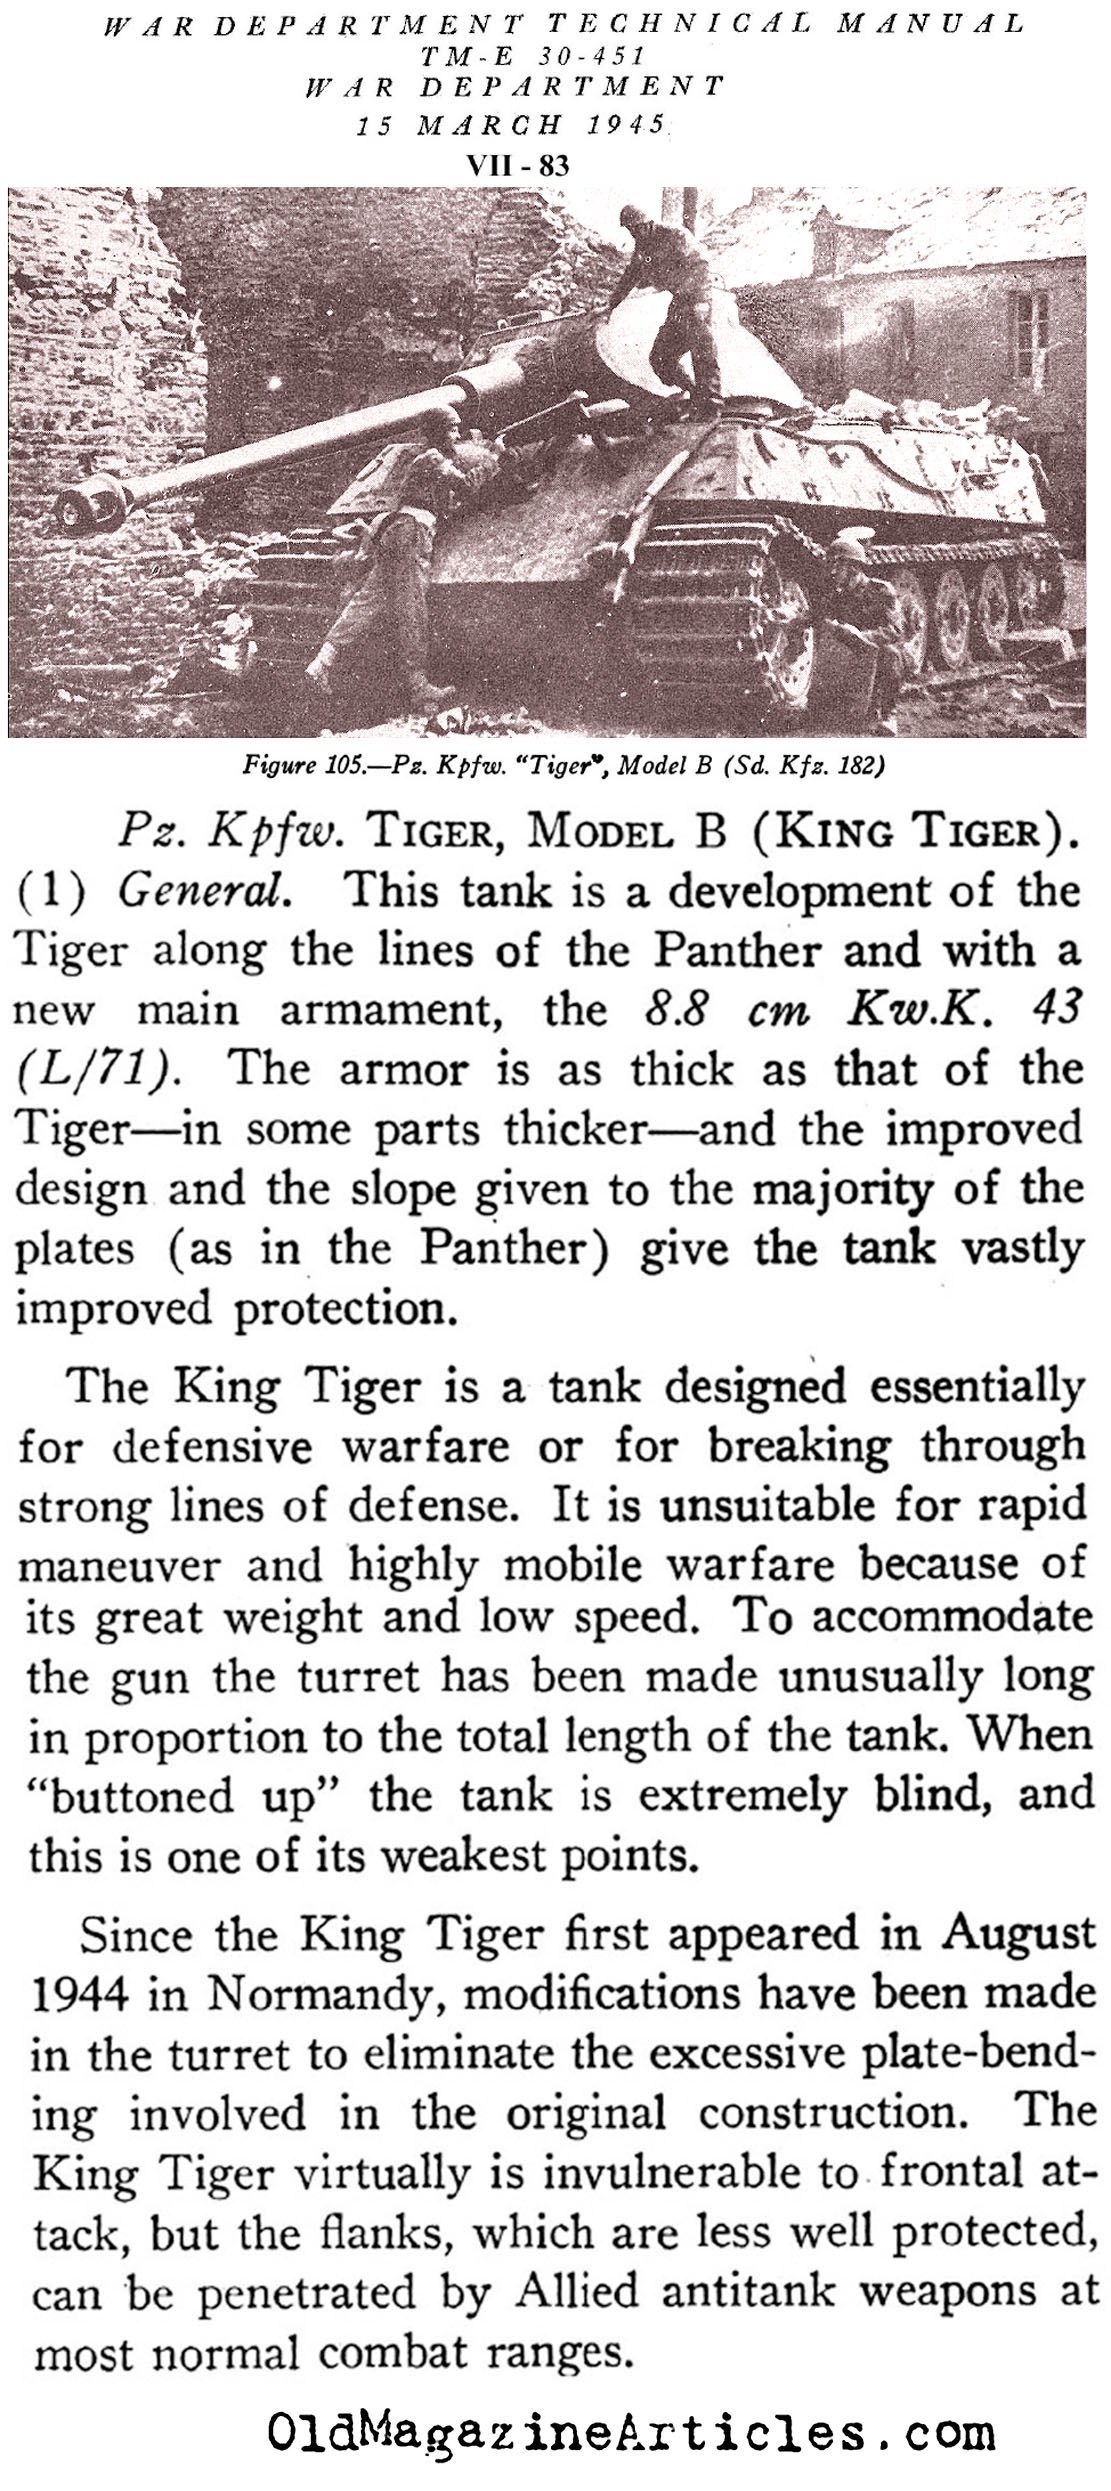 The  King Tiger Tank  (U.S. Dept. of War, 1945)